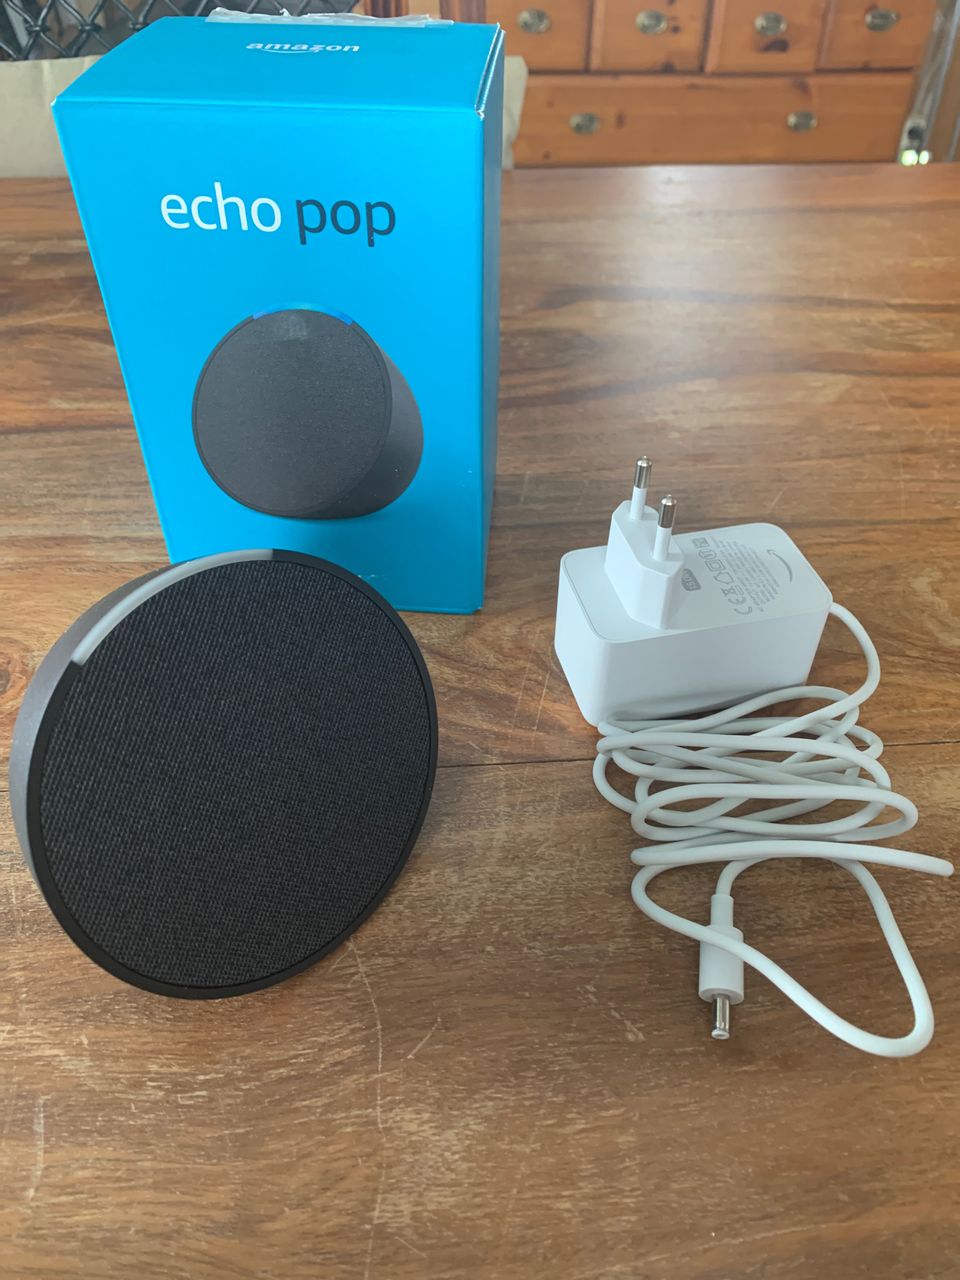 Echo pop